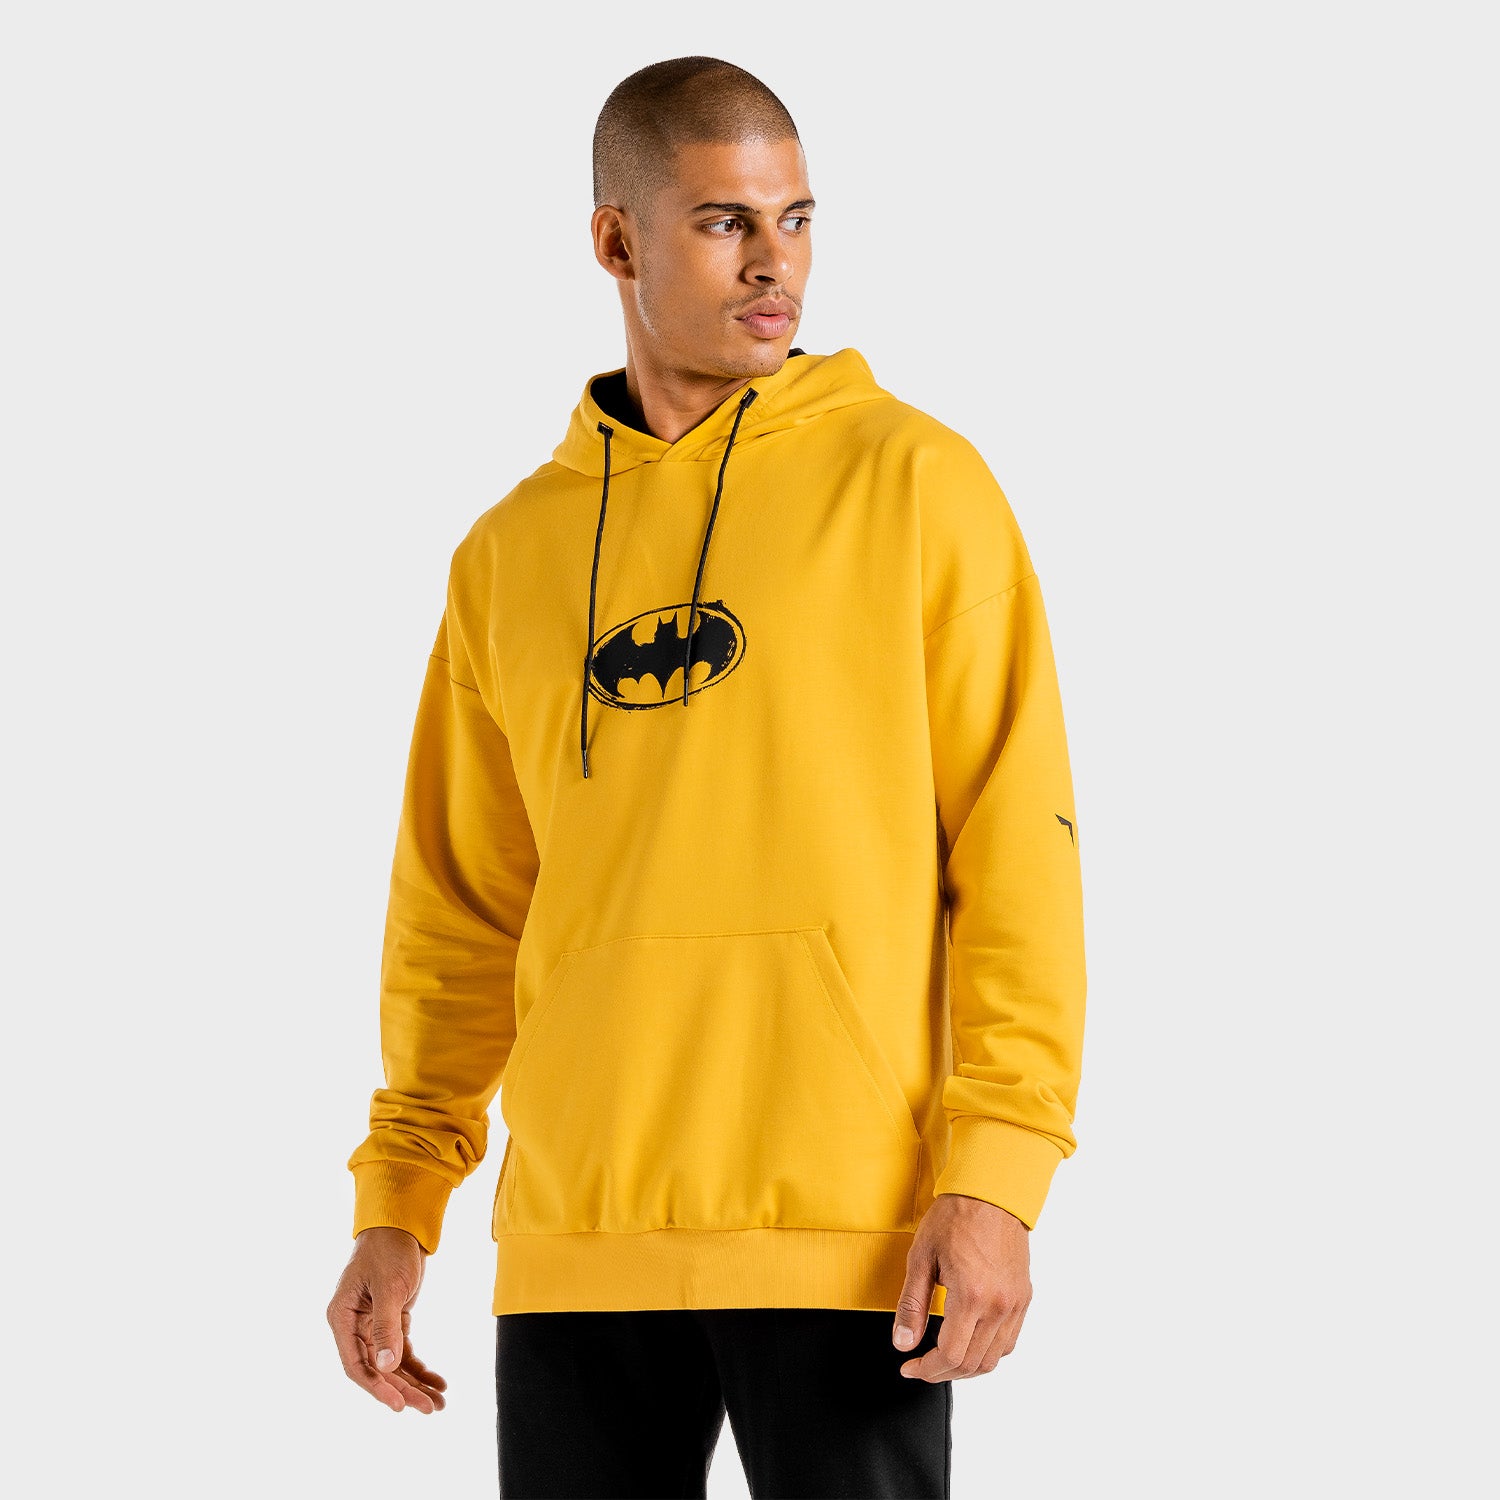 squatwolf-workout-hoodies-for-men-batman-gym-hoodie-yellow-gym-wear